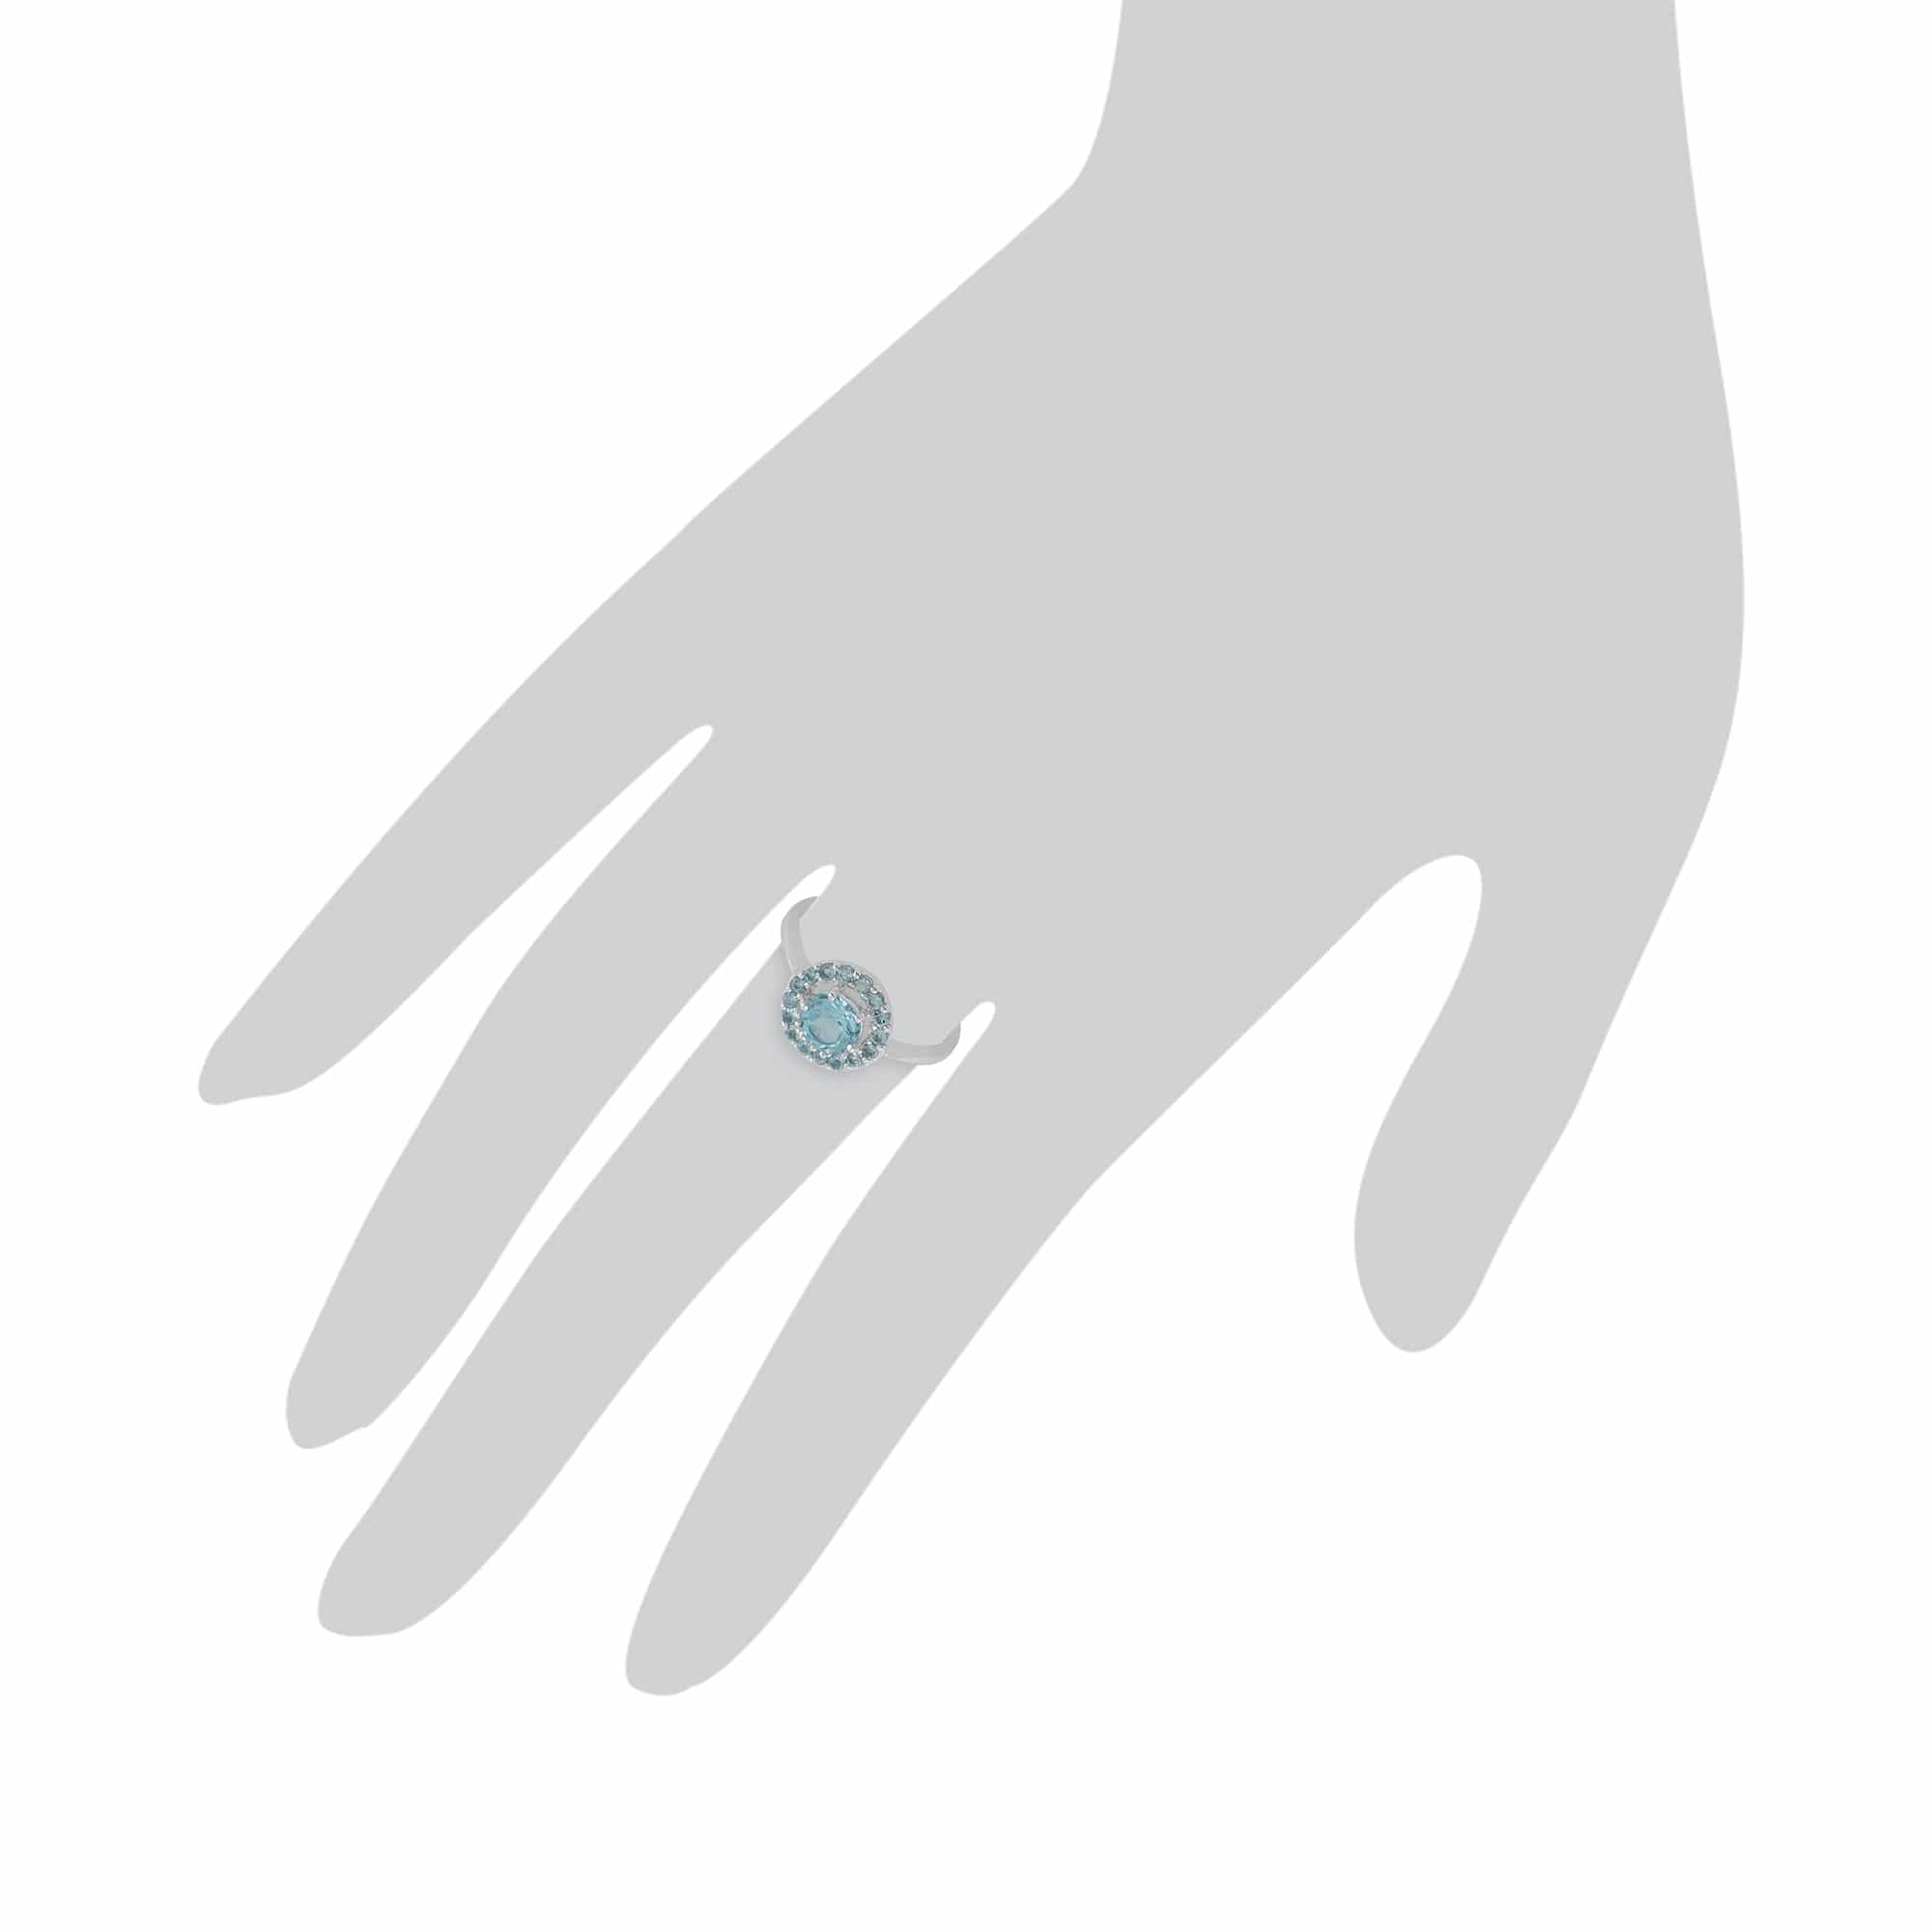 Gemondo 9ct White Gold 1.07ct Blue Topaz Halo Ring Image 3